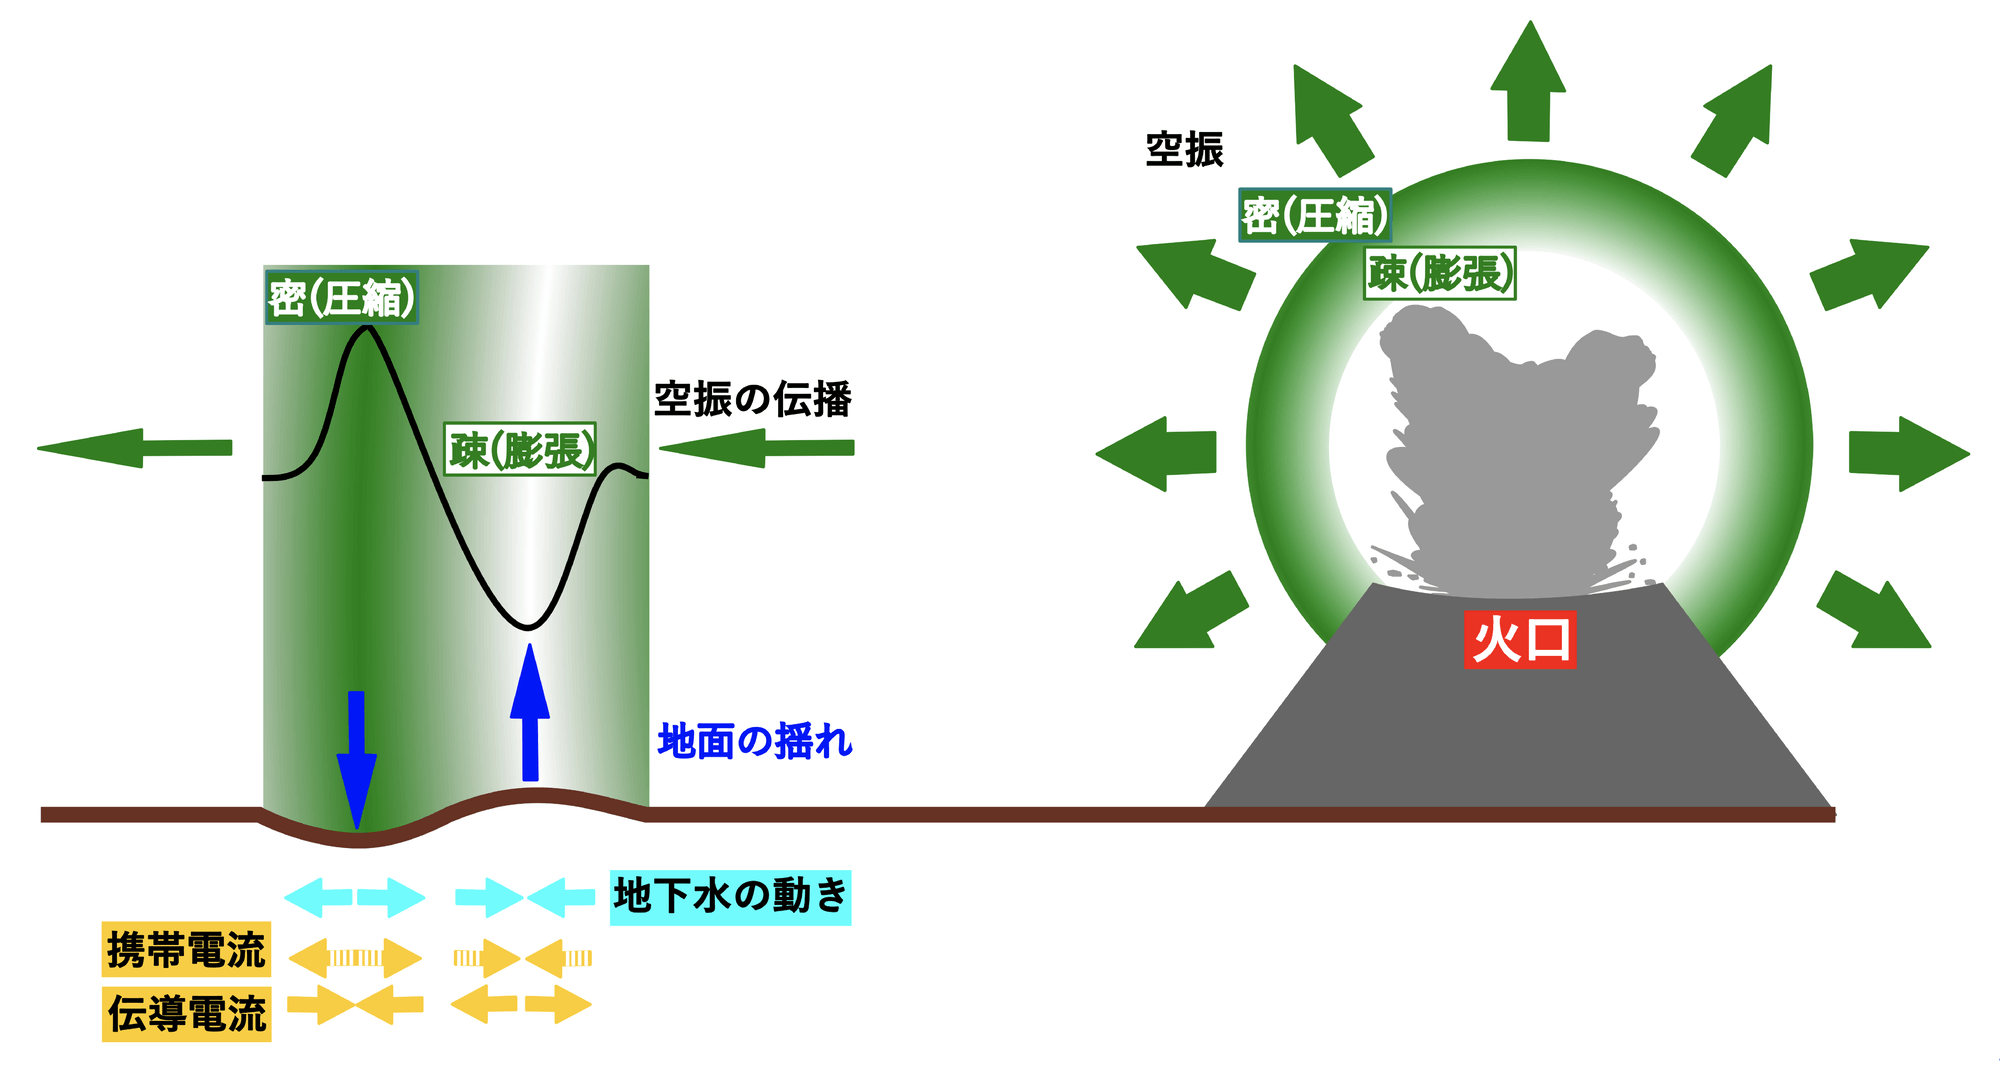 <dfn class="fig">図4</dfn>：<span class="qrinews-figure-title">爆発的噴火で生じる空振 (右) とそれによる電流の模式図 (左)</span>　空振が地面を上下に押して水平方向に水を動かす。この時、観測可能な電流 (伝導電流) が発生する。図は安仁屋さんより提供。